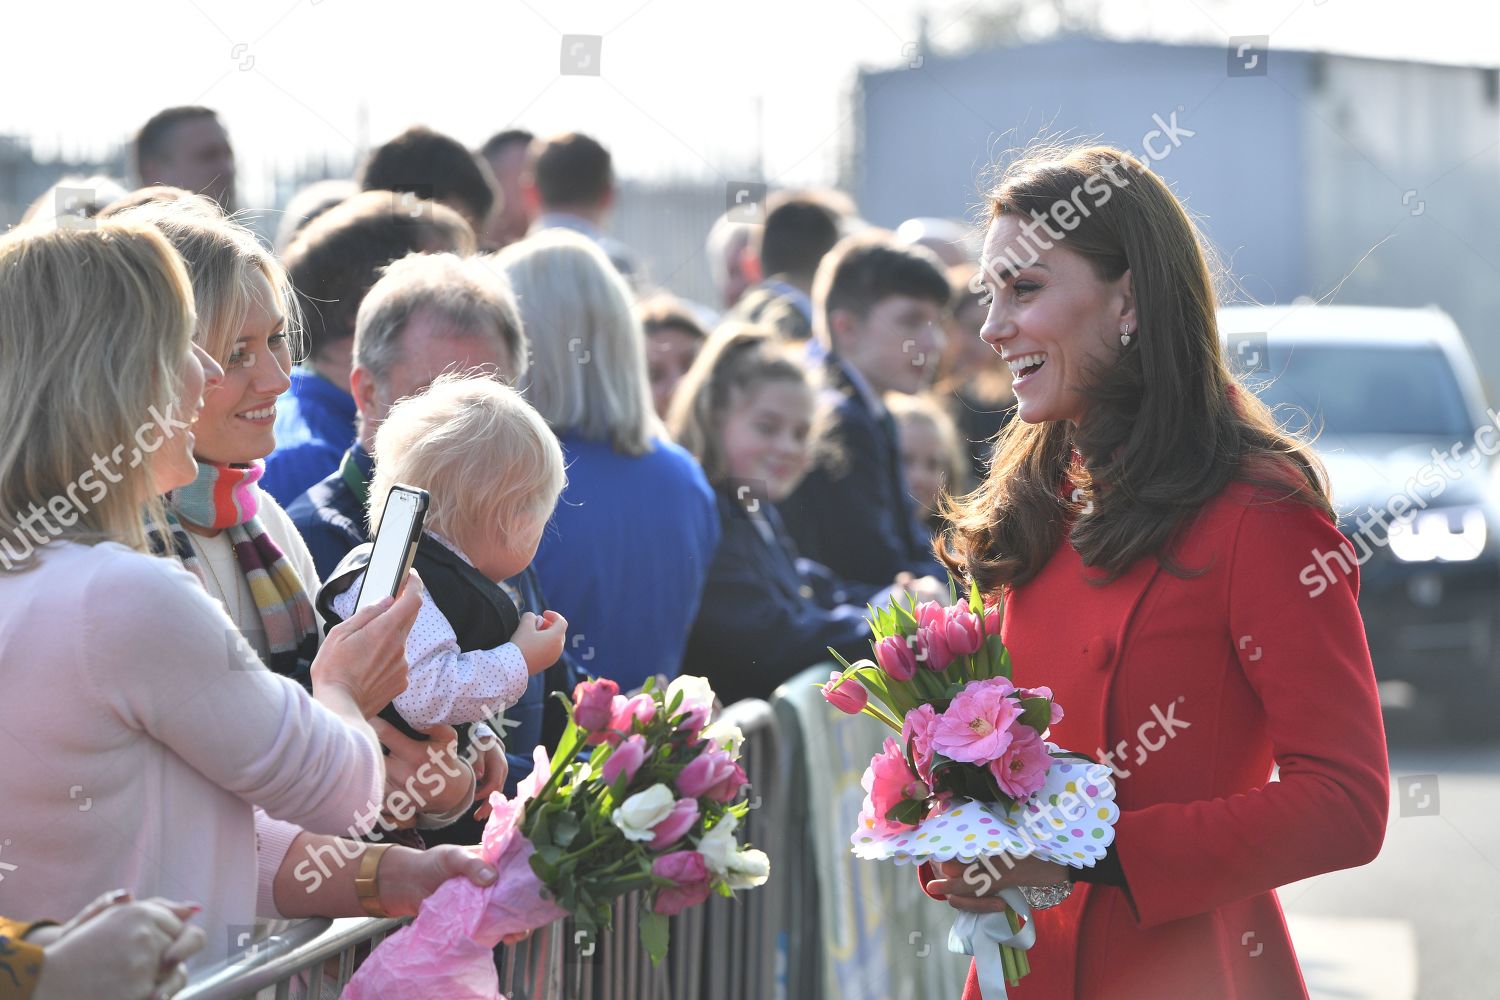 prince-william-and-catherine-duchess-of-cambridge-visit-to-northern-ireland-shutterstock-editorial-10122058g.jpg